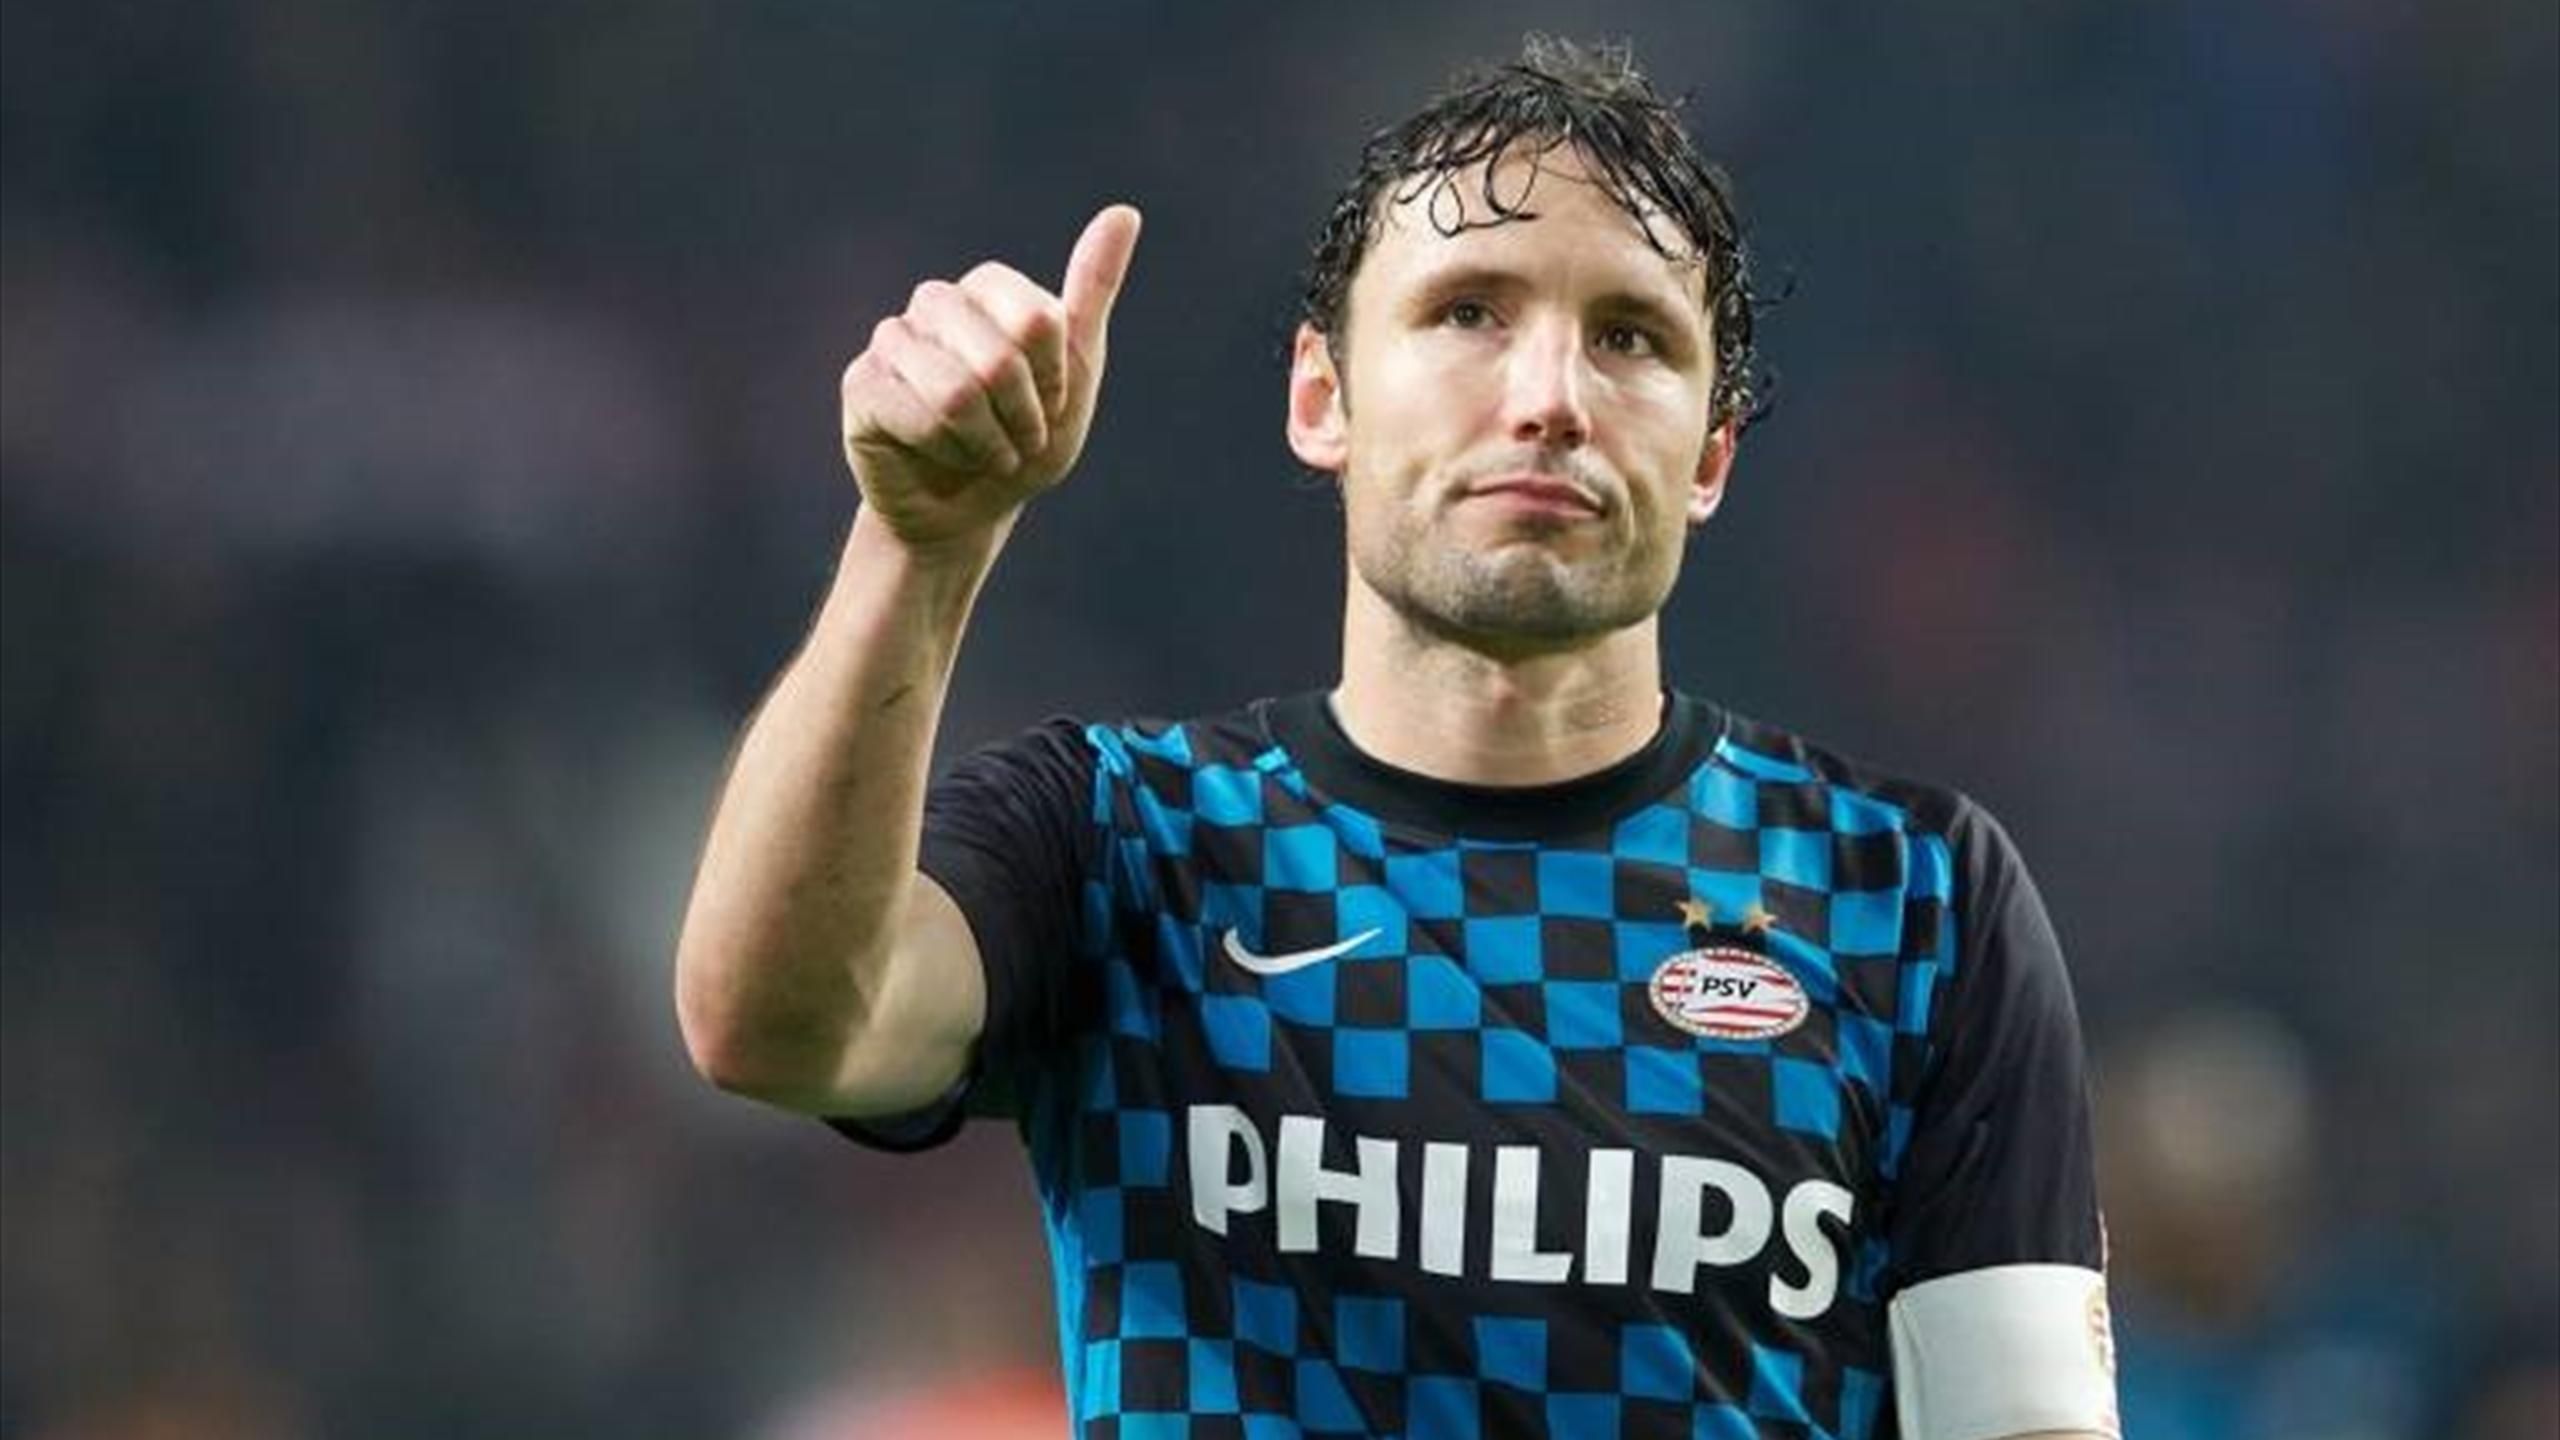 PSV skipper Van Bommel retires after 21 seasons - Eurosport